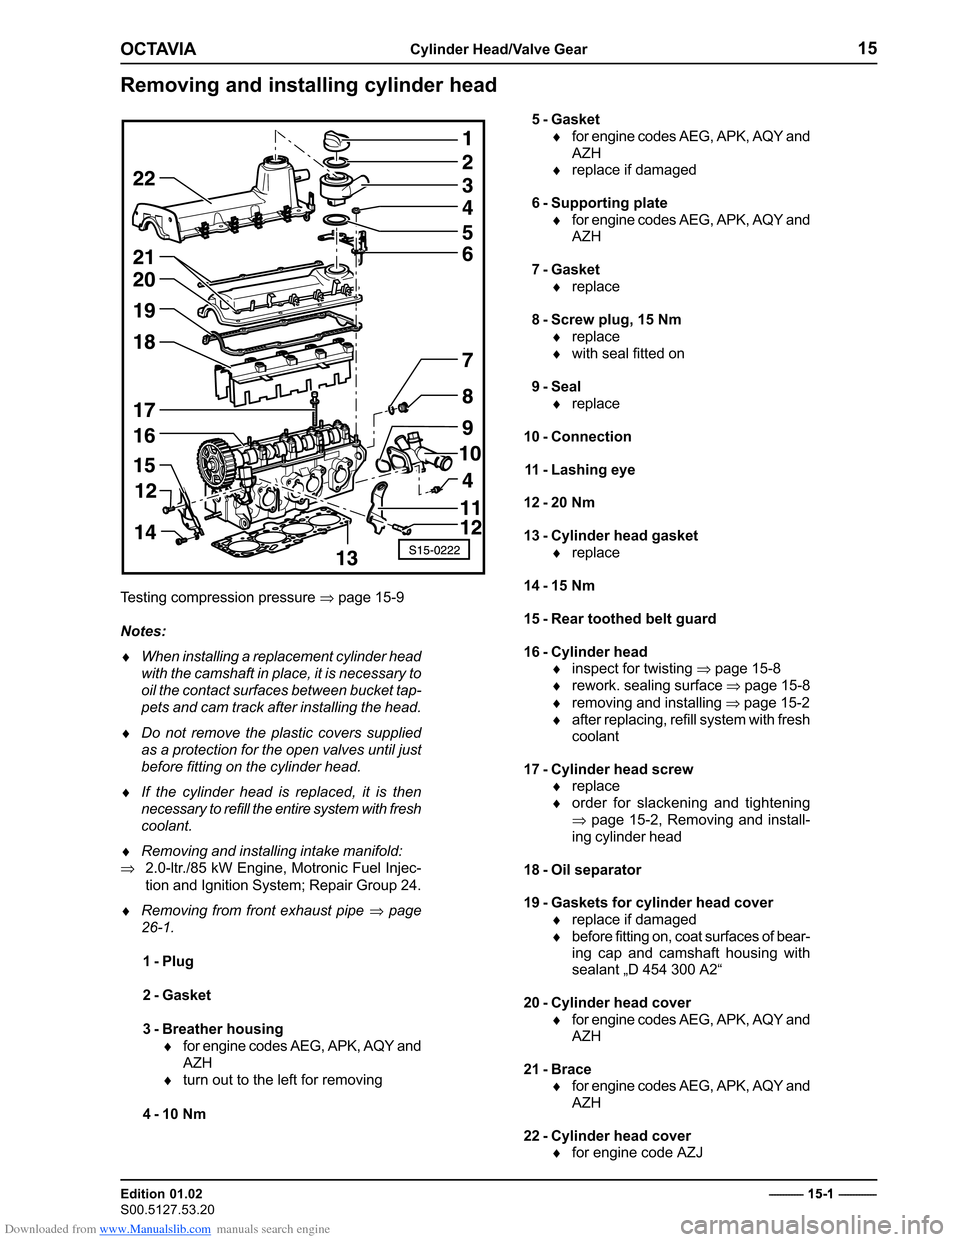 SKODA OCTAVIA 2000 1.G / (1U) 2.0 85kw Engine Repair Manual Downloaded from www.Manualslib.com manuals search engine ���������������������������������
������������� 
�����������������������������

�� �������������
����������������������������� �����������
��